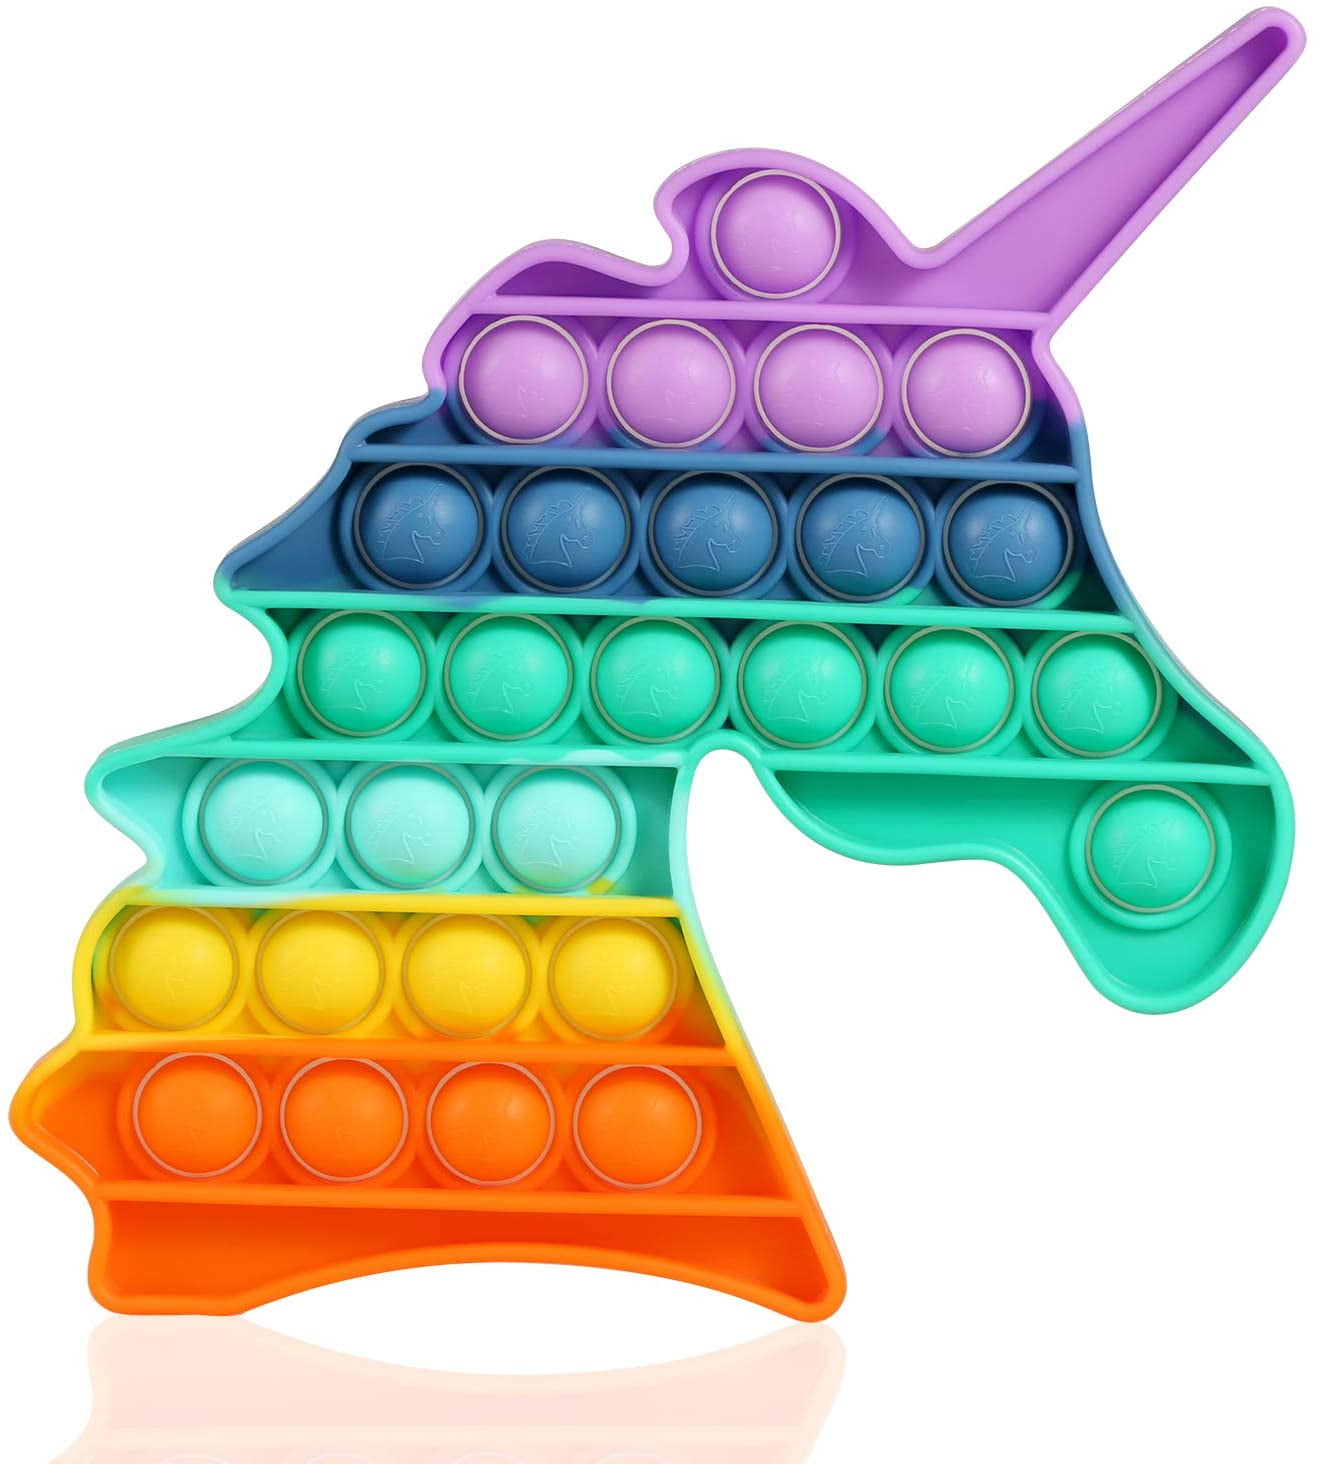 Details about   AMONG US Pop Its Square Fidget Toy Push Bubble Stress Relief Kids Pop It Gift 